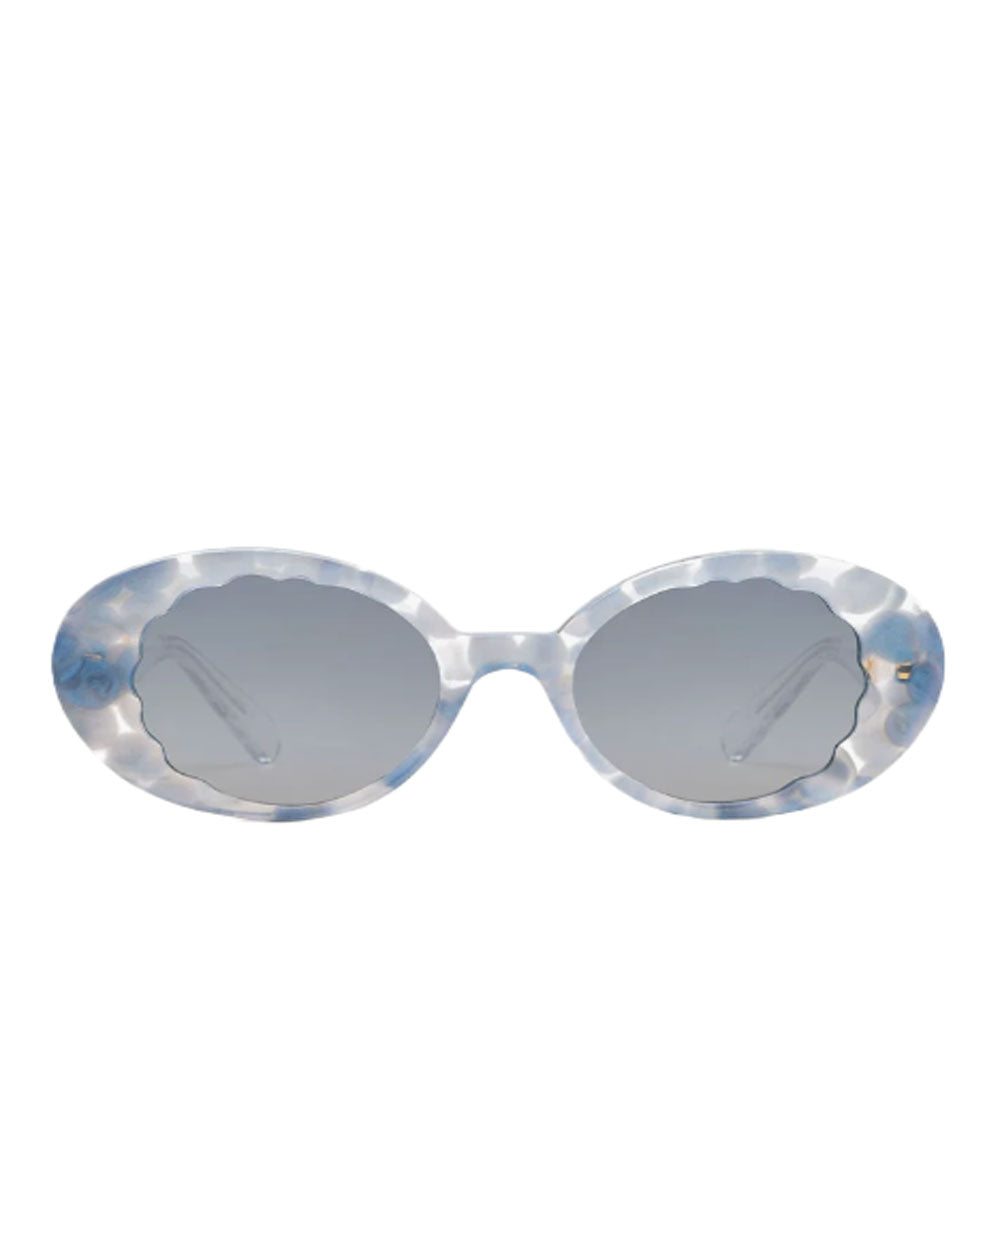 Alixe Mirrored Sunglasses in Opaline